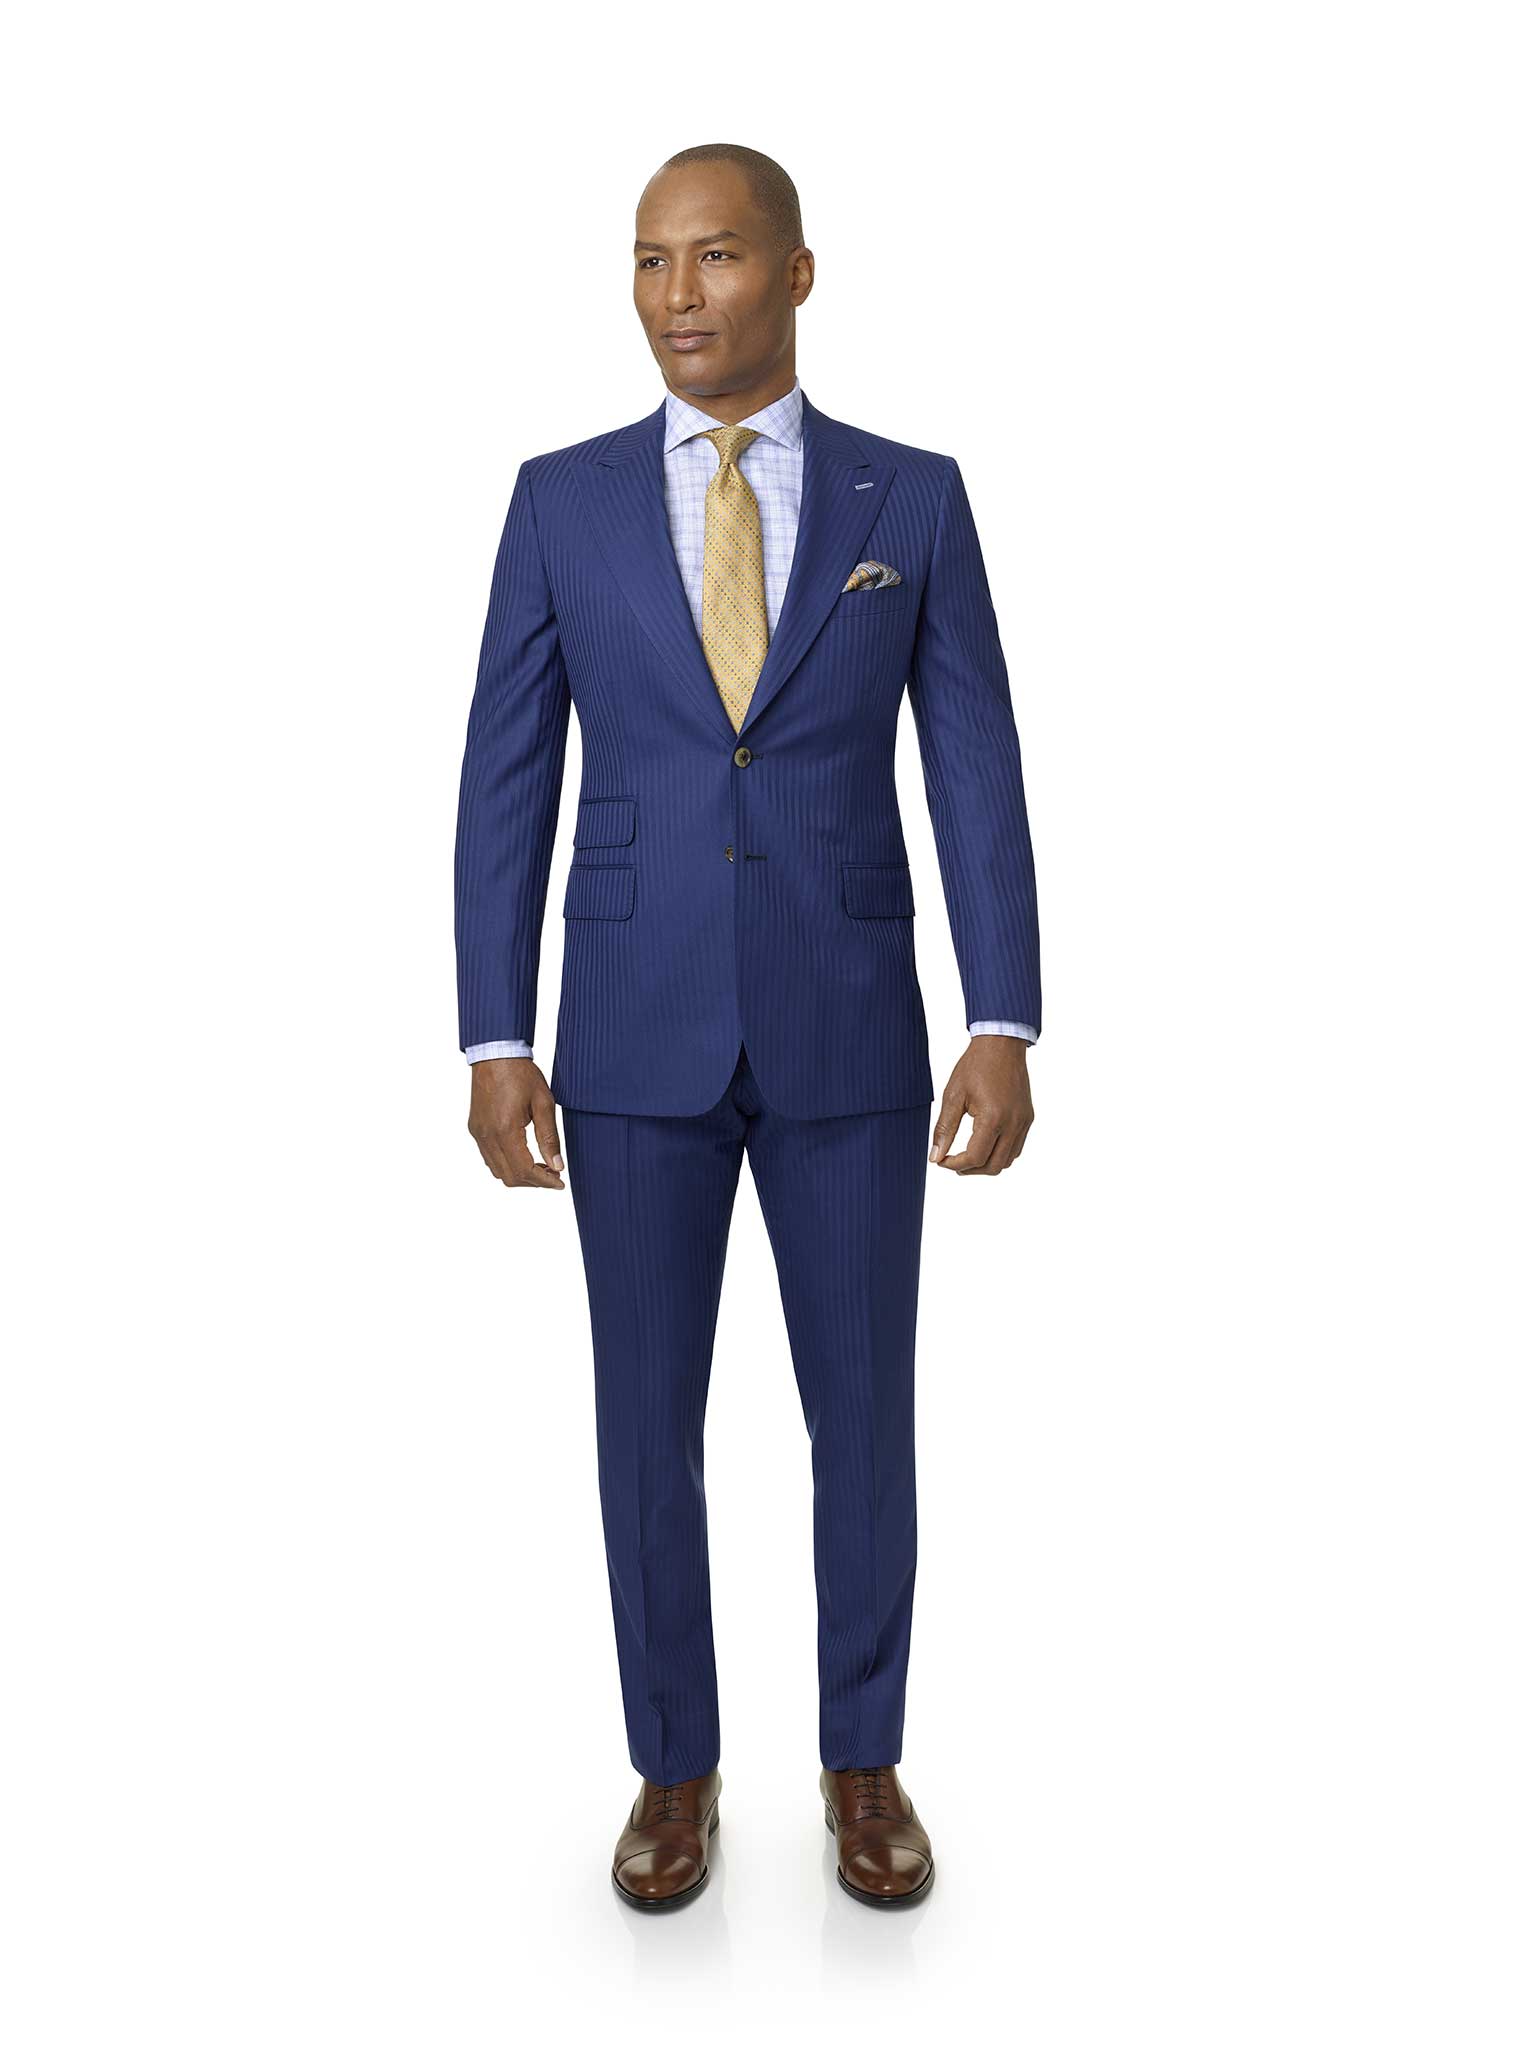 Men's Custom Suits                                                                                                                                                                                                                                        , French Blue Shadow Stripe Suit